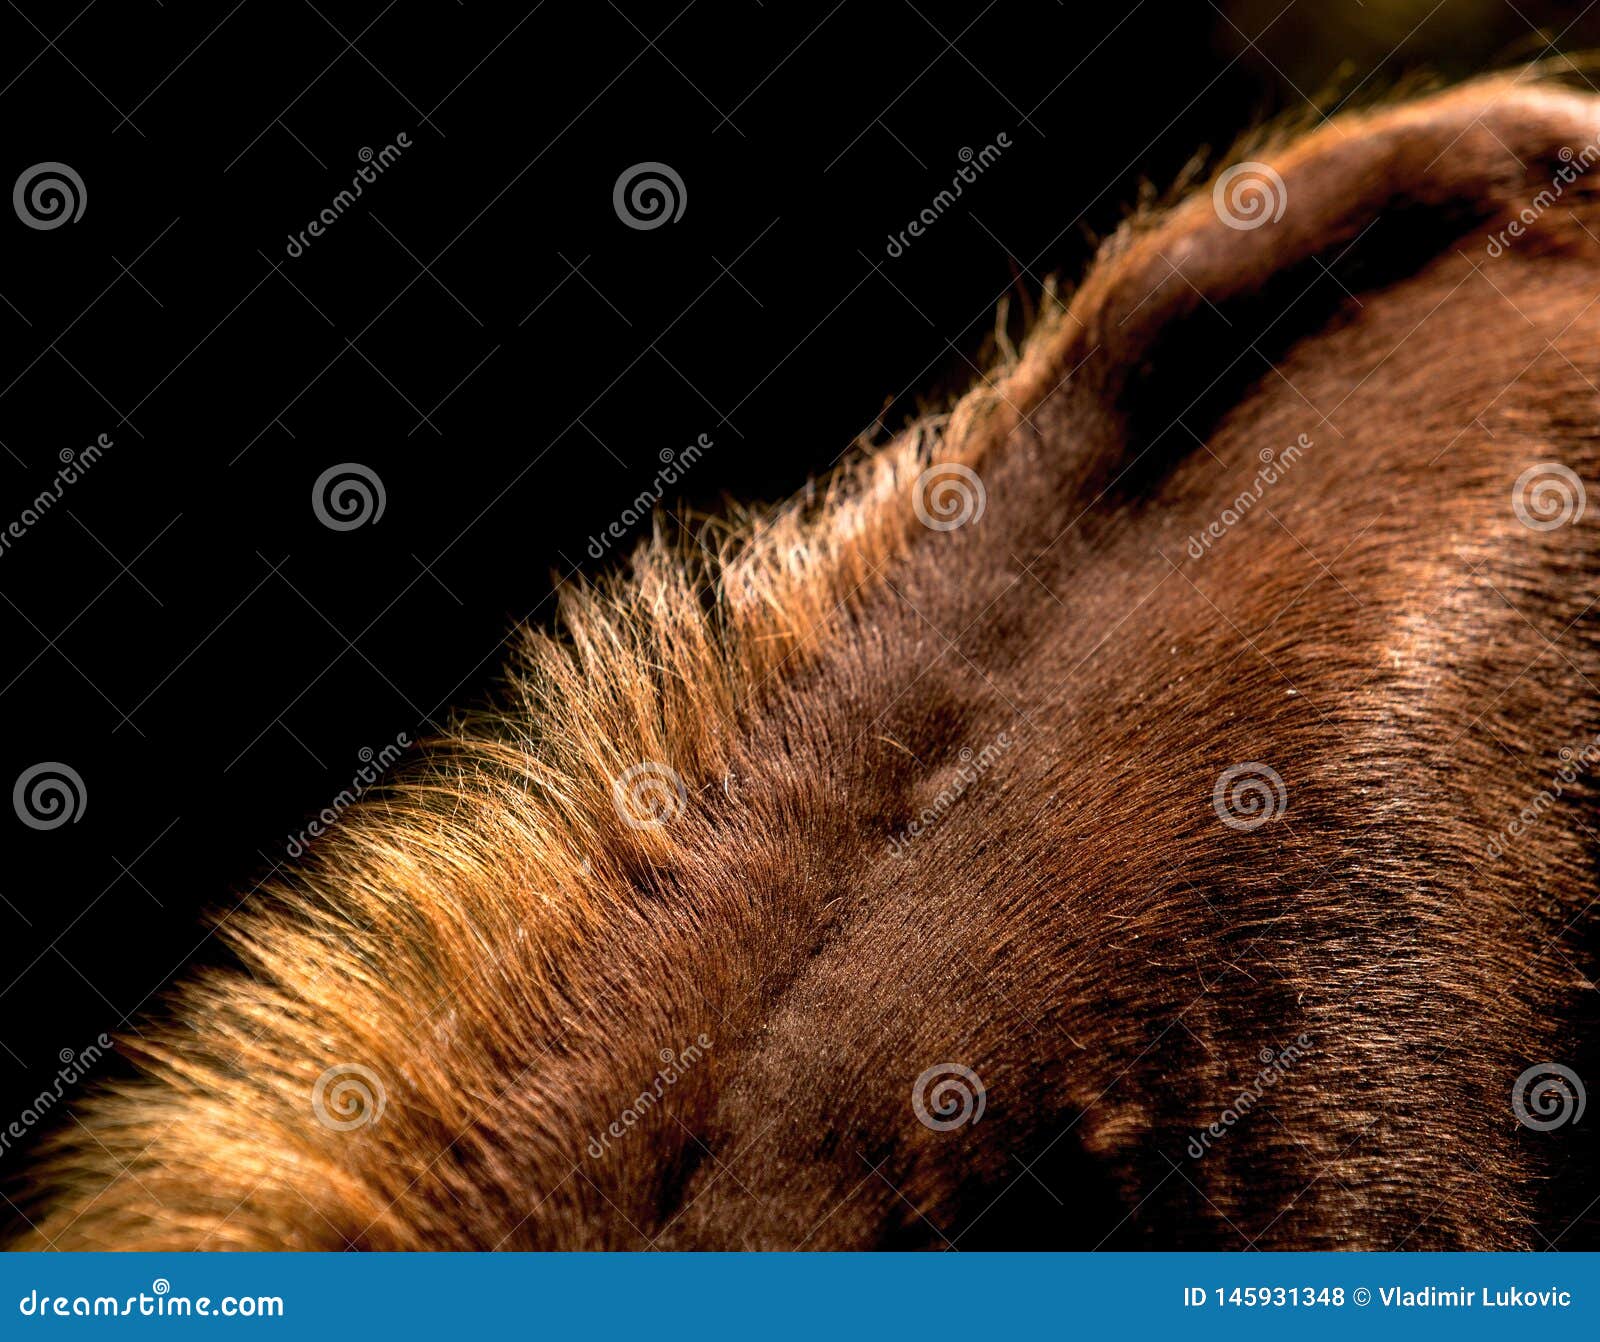 mane detail on brown horse back b/w